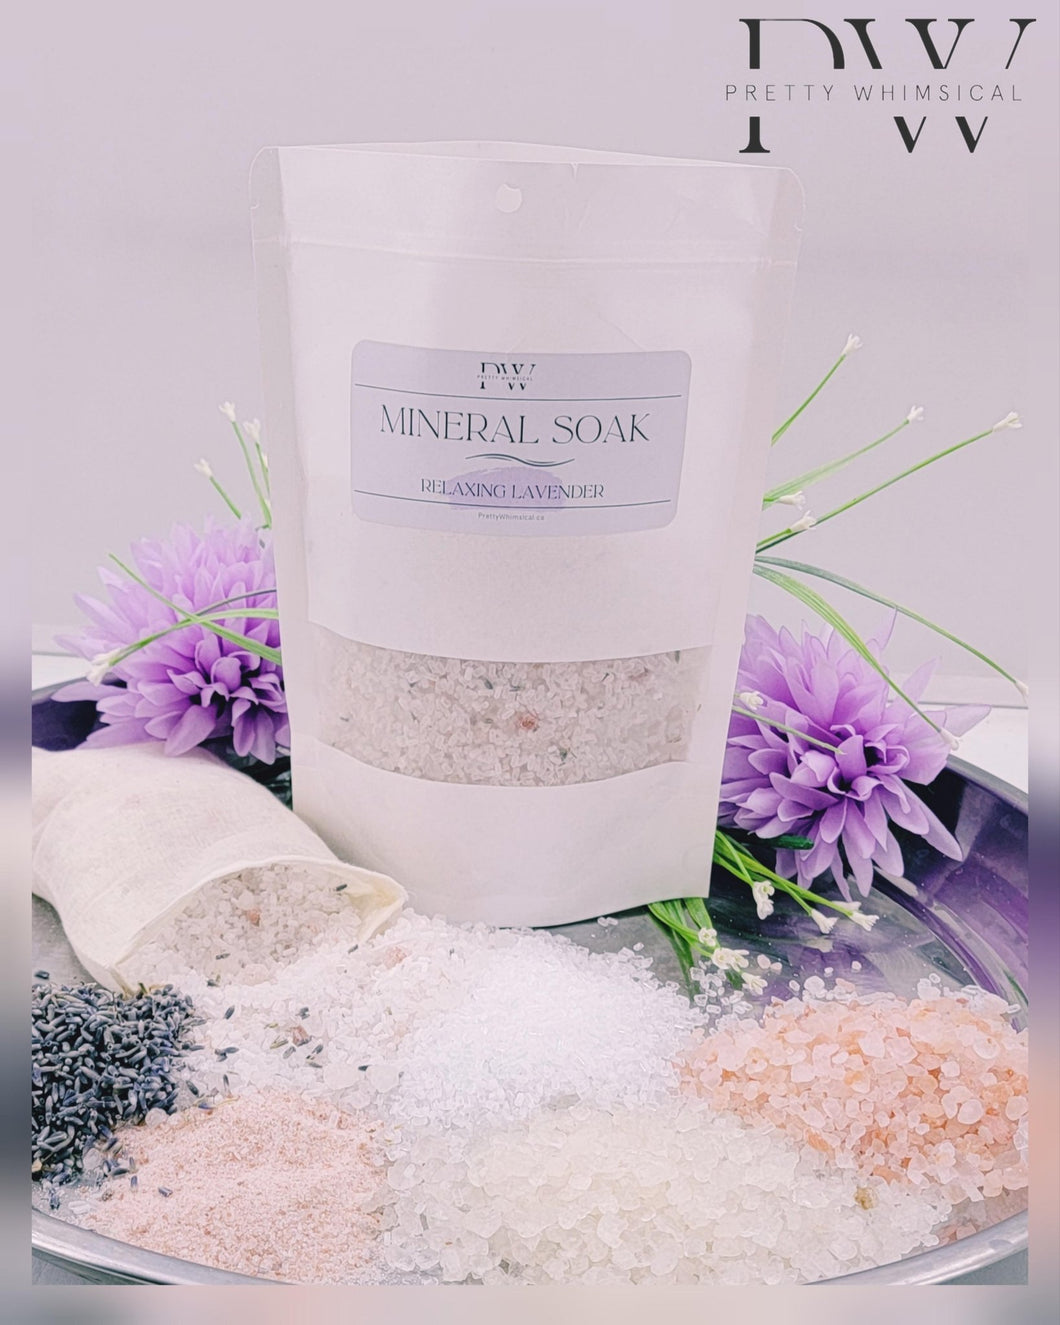 Relaxing Lavender Bath Mineral Soak Pretty Whimsical